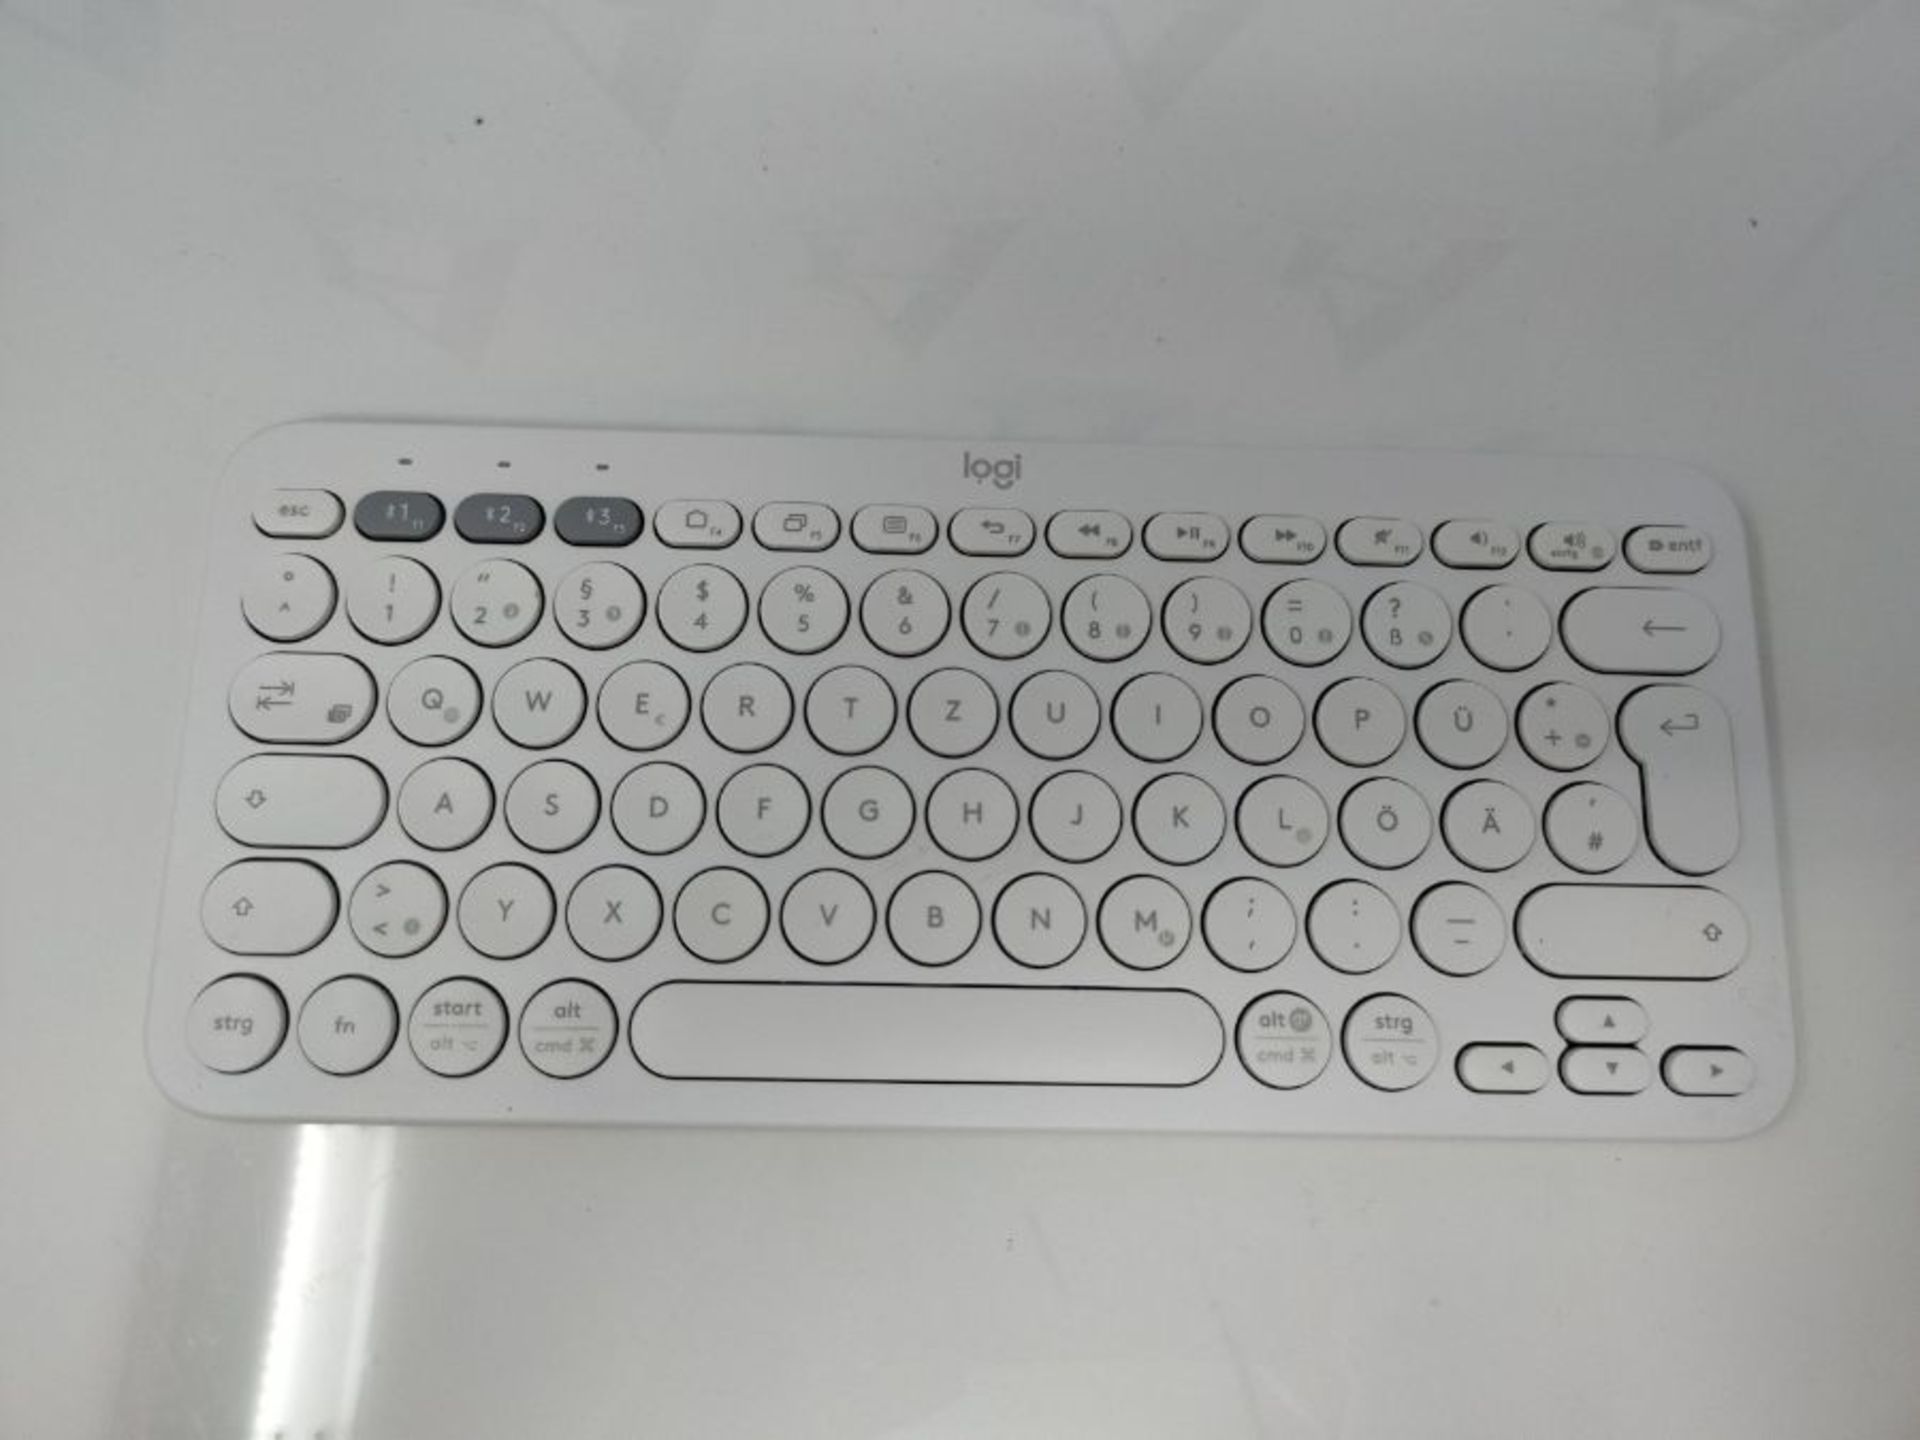 Logitech K380 Multi-Device Bluetooth Keyboard, QWERTZ German Layout - White - Image 3 of 3